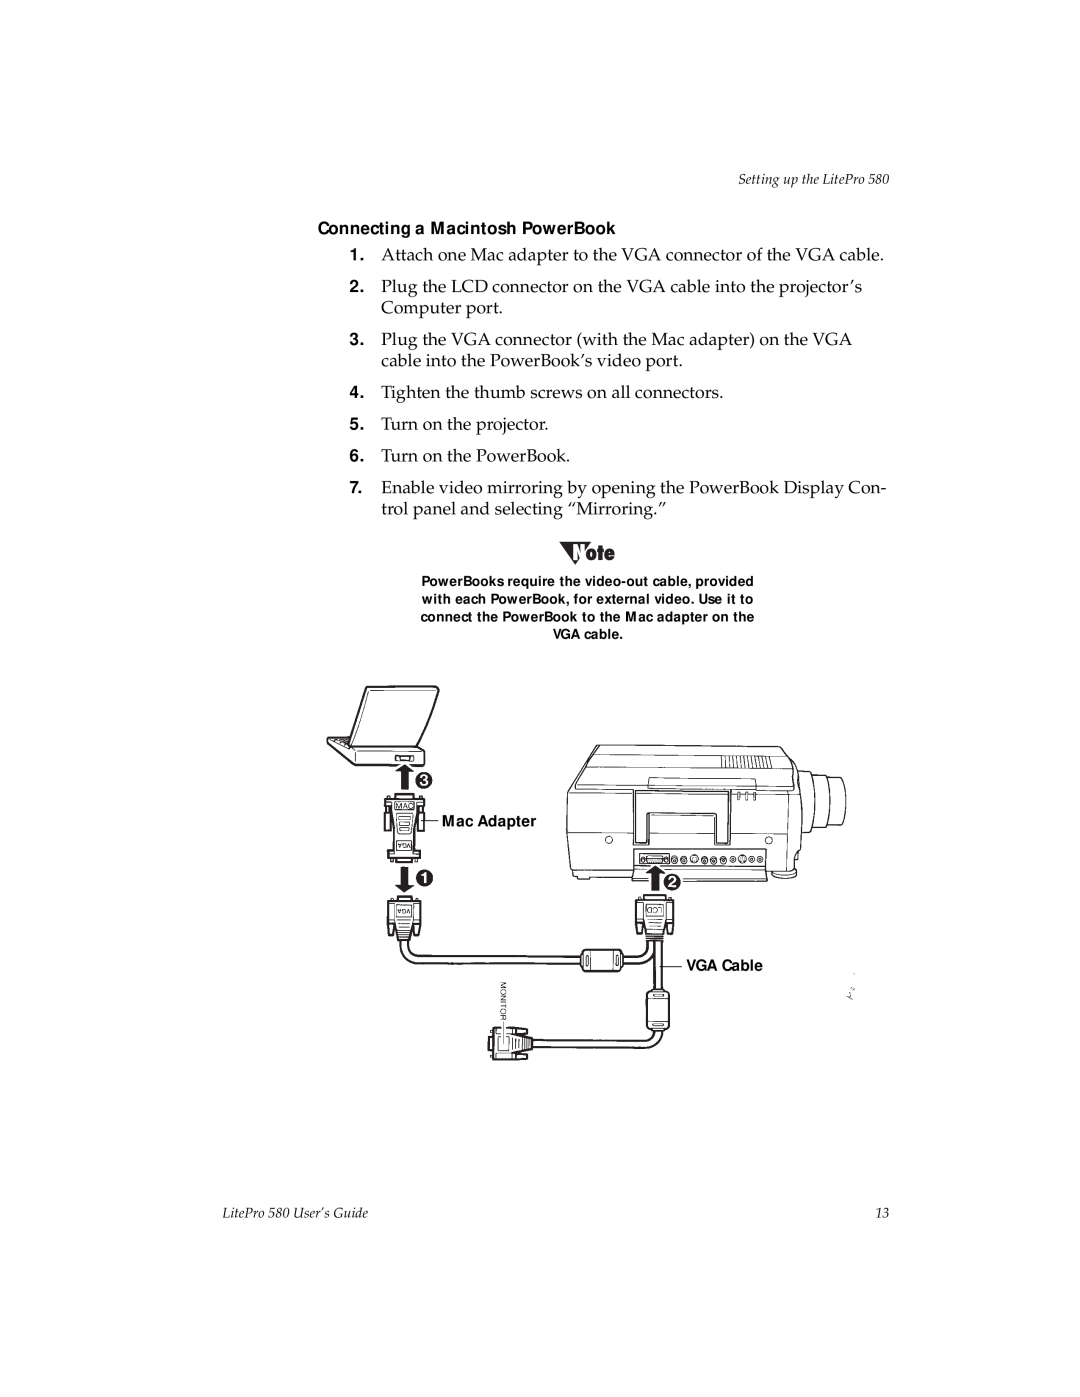 Hubbell 580 manual Connecting a Macintosh PowerBook, Mac Adapter VGA Cable 